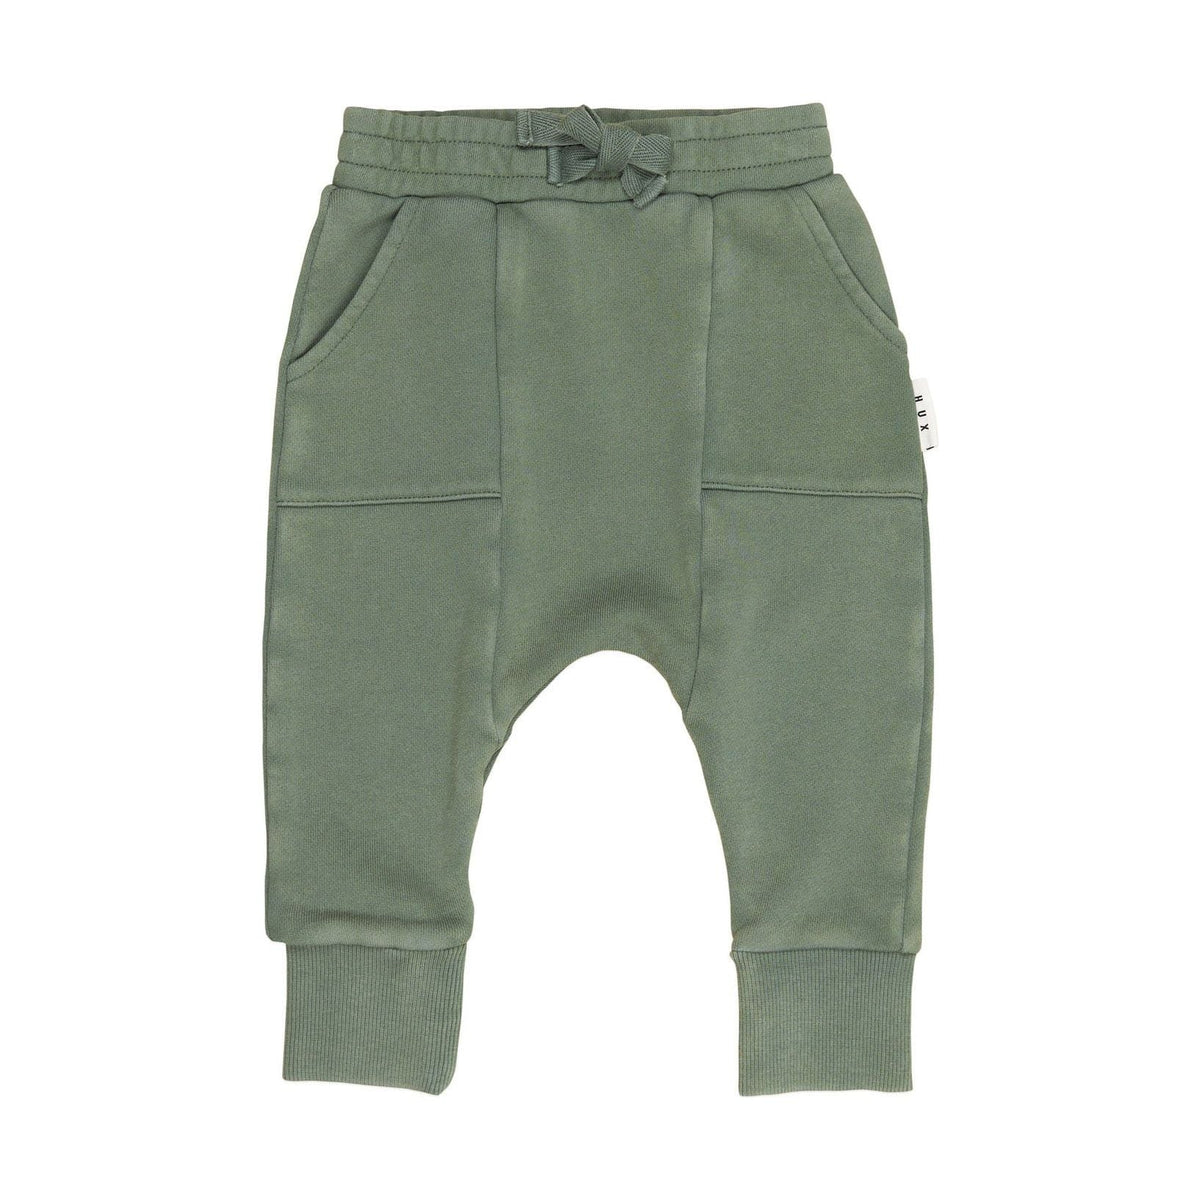 Vintage Green Drop Crotch Pant